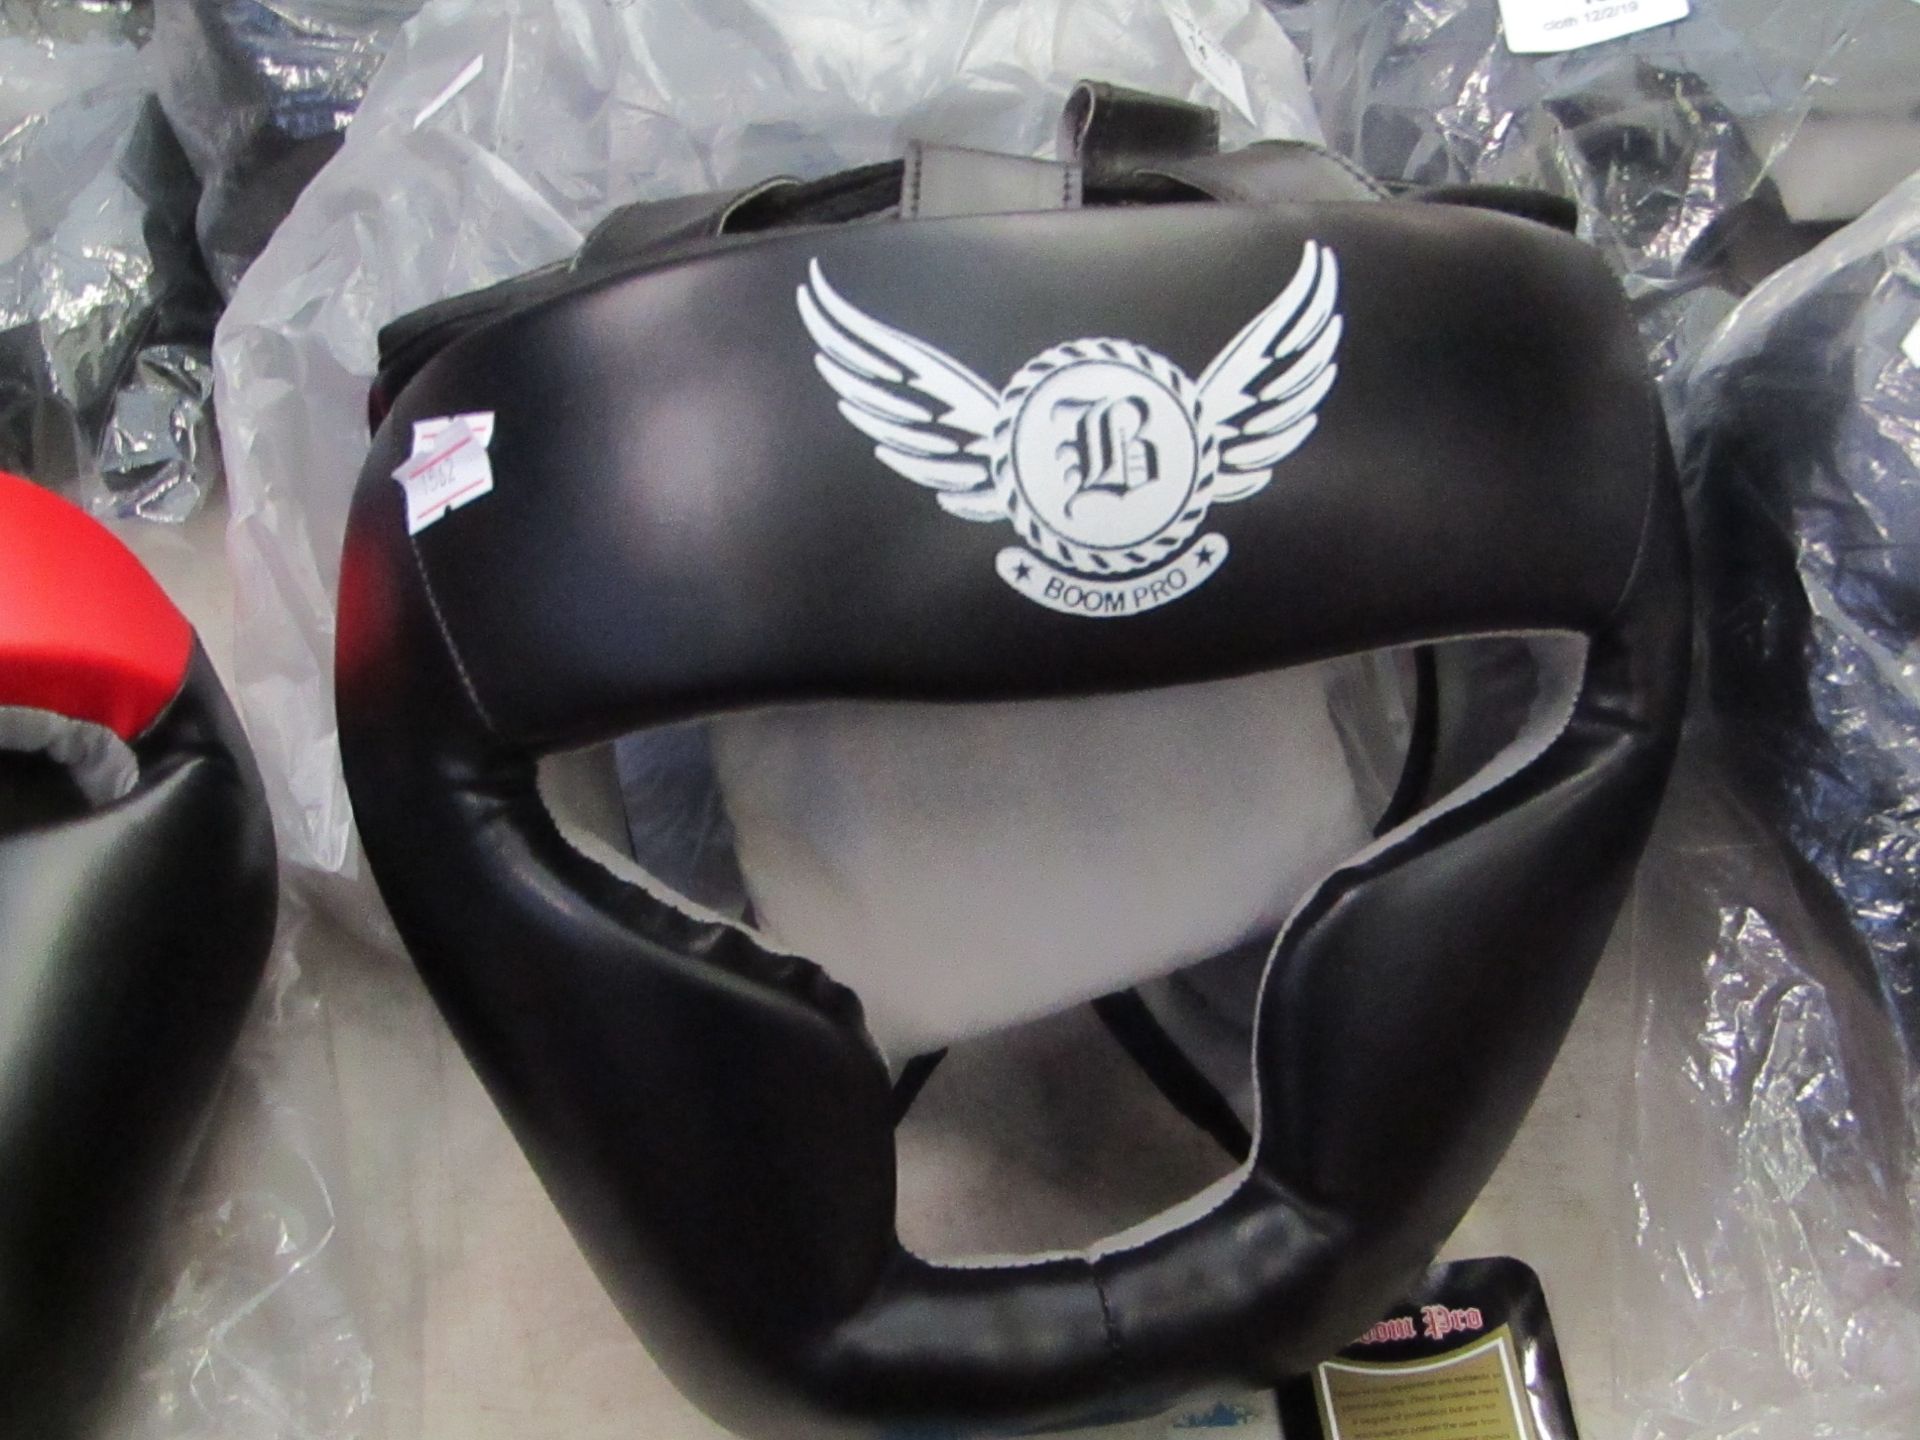 Boom Pro Leather Head Guard size XL new